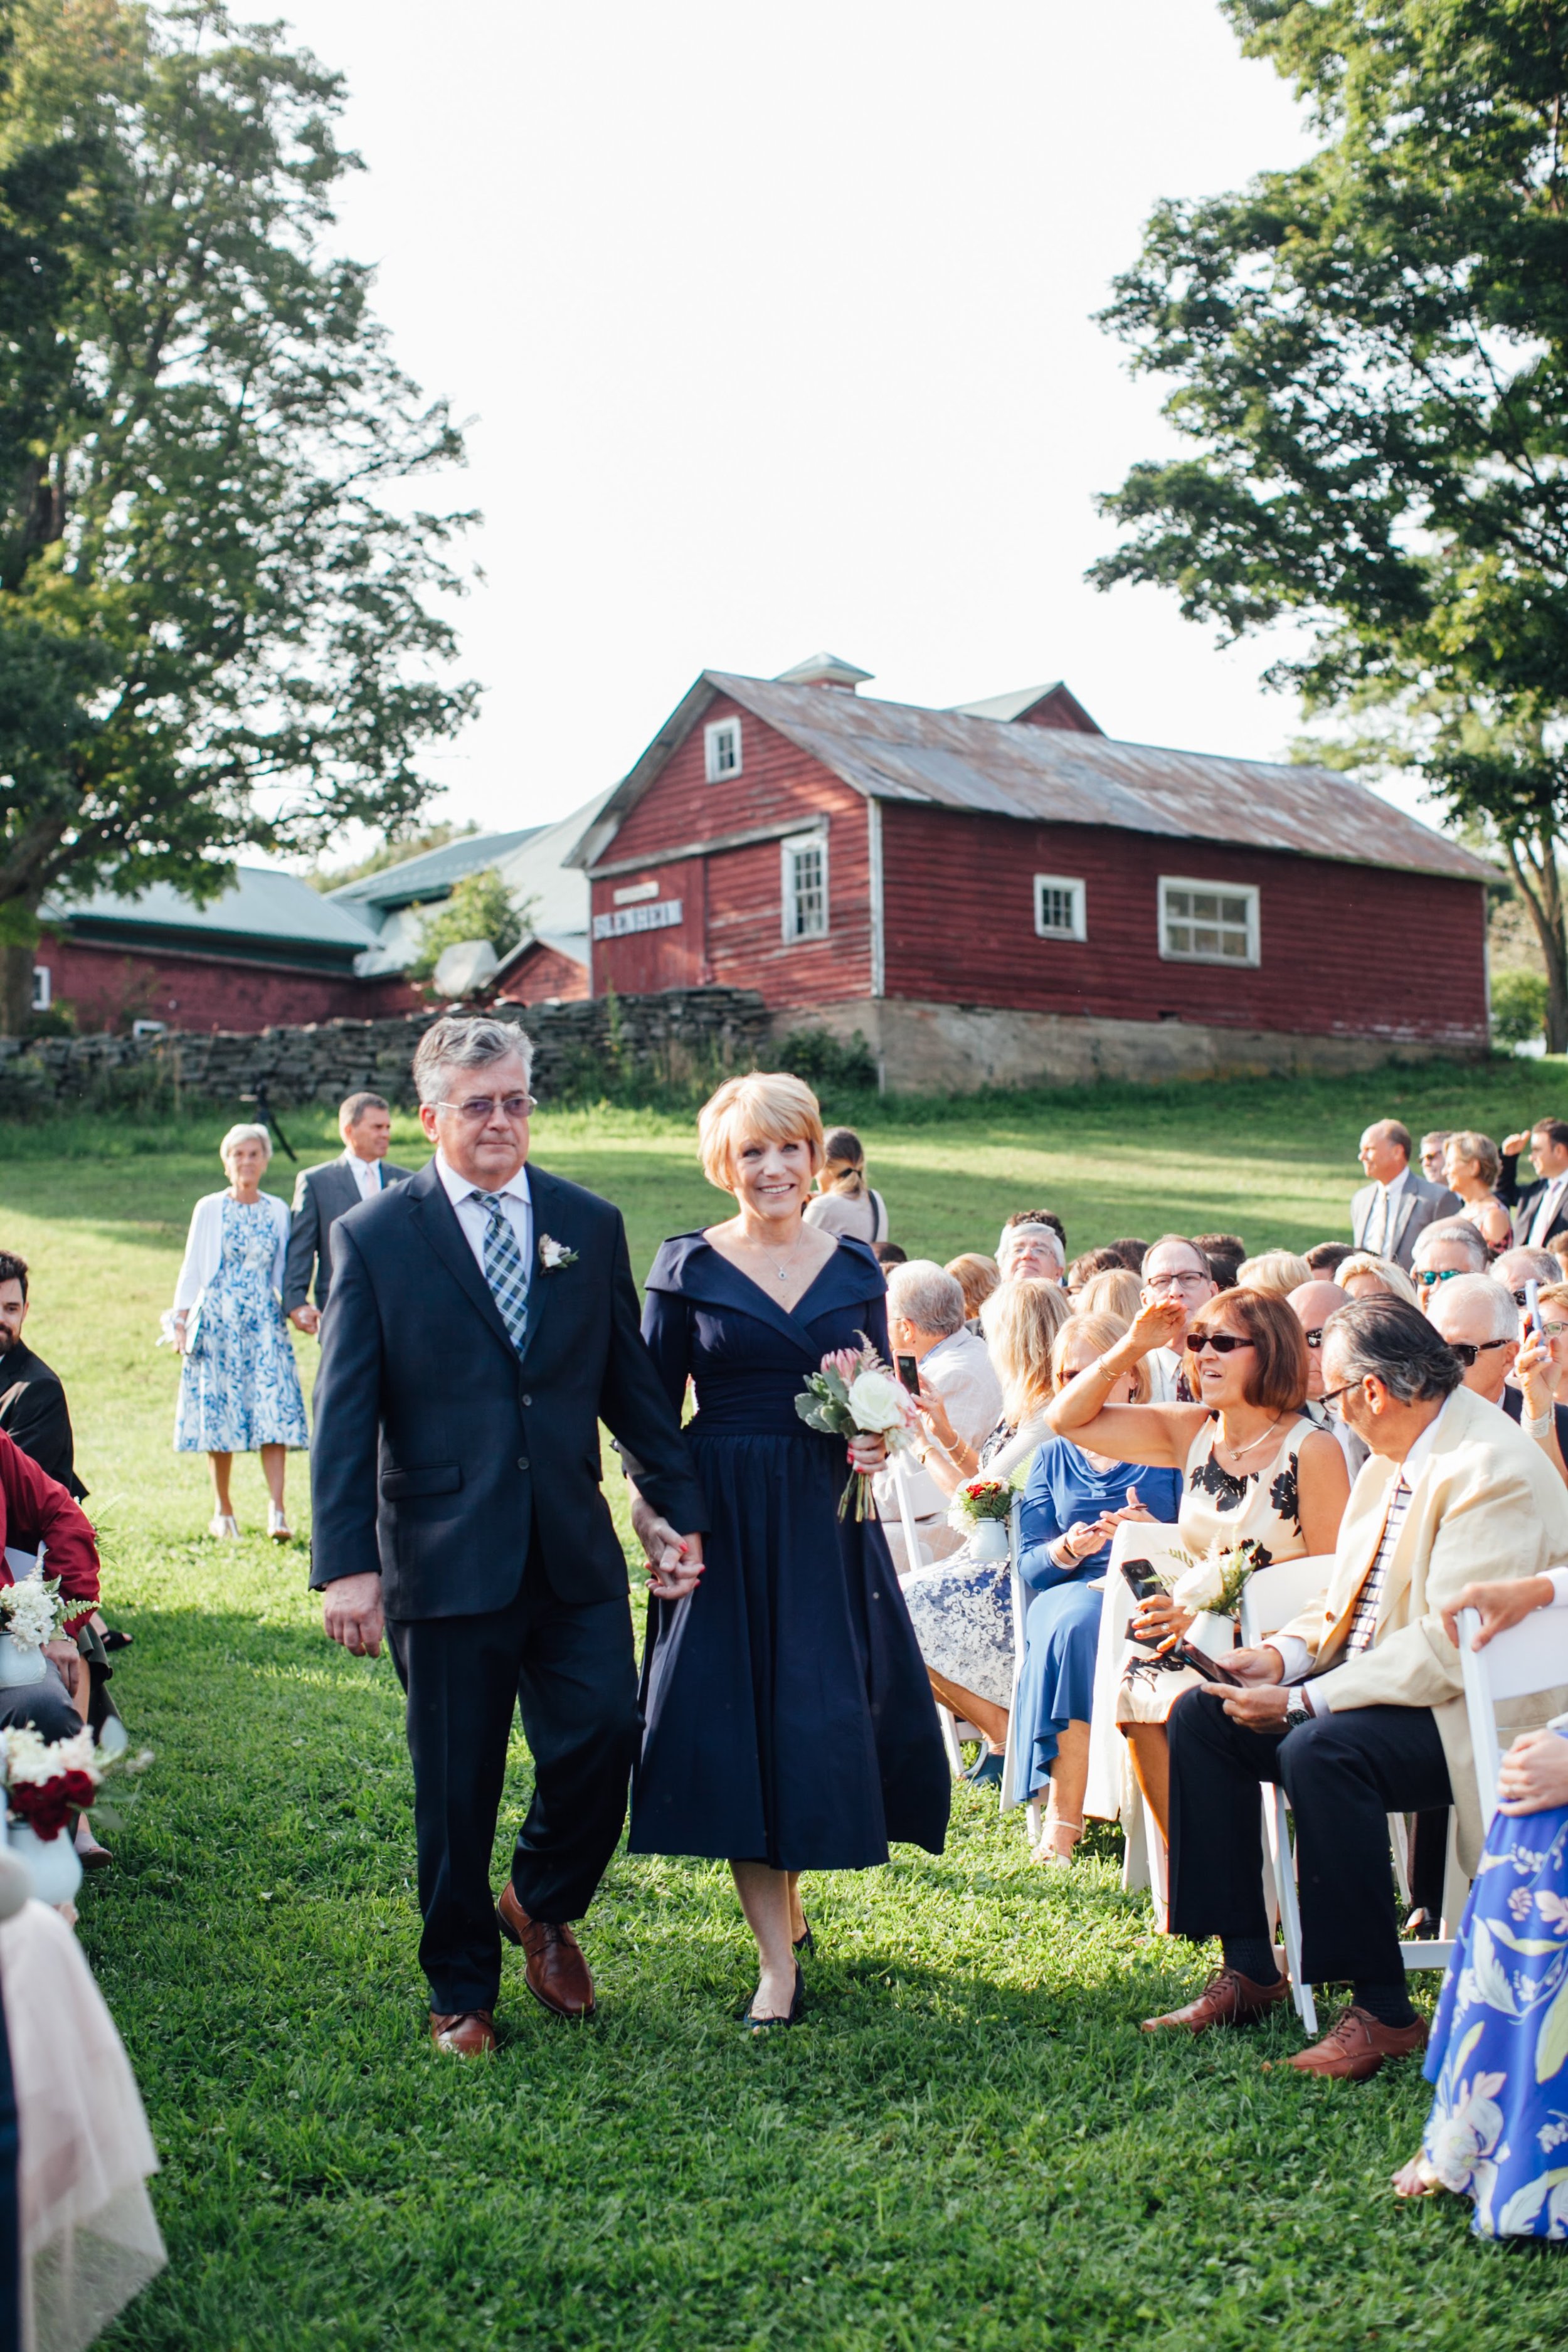 Courtney + Matt Blenheim Hill Farm Catskills NY Wedding Veronica Lola Photography 2017-349.jpg